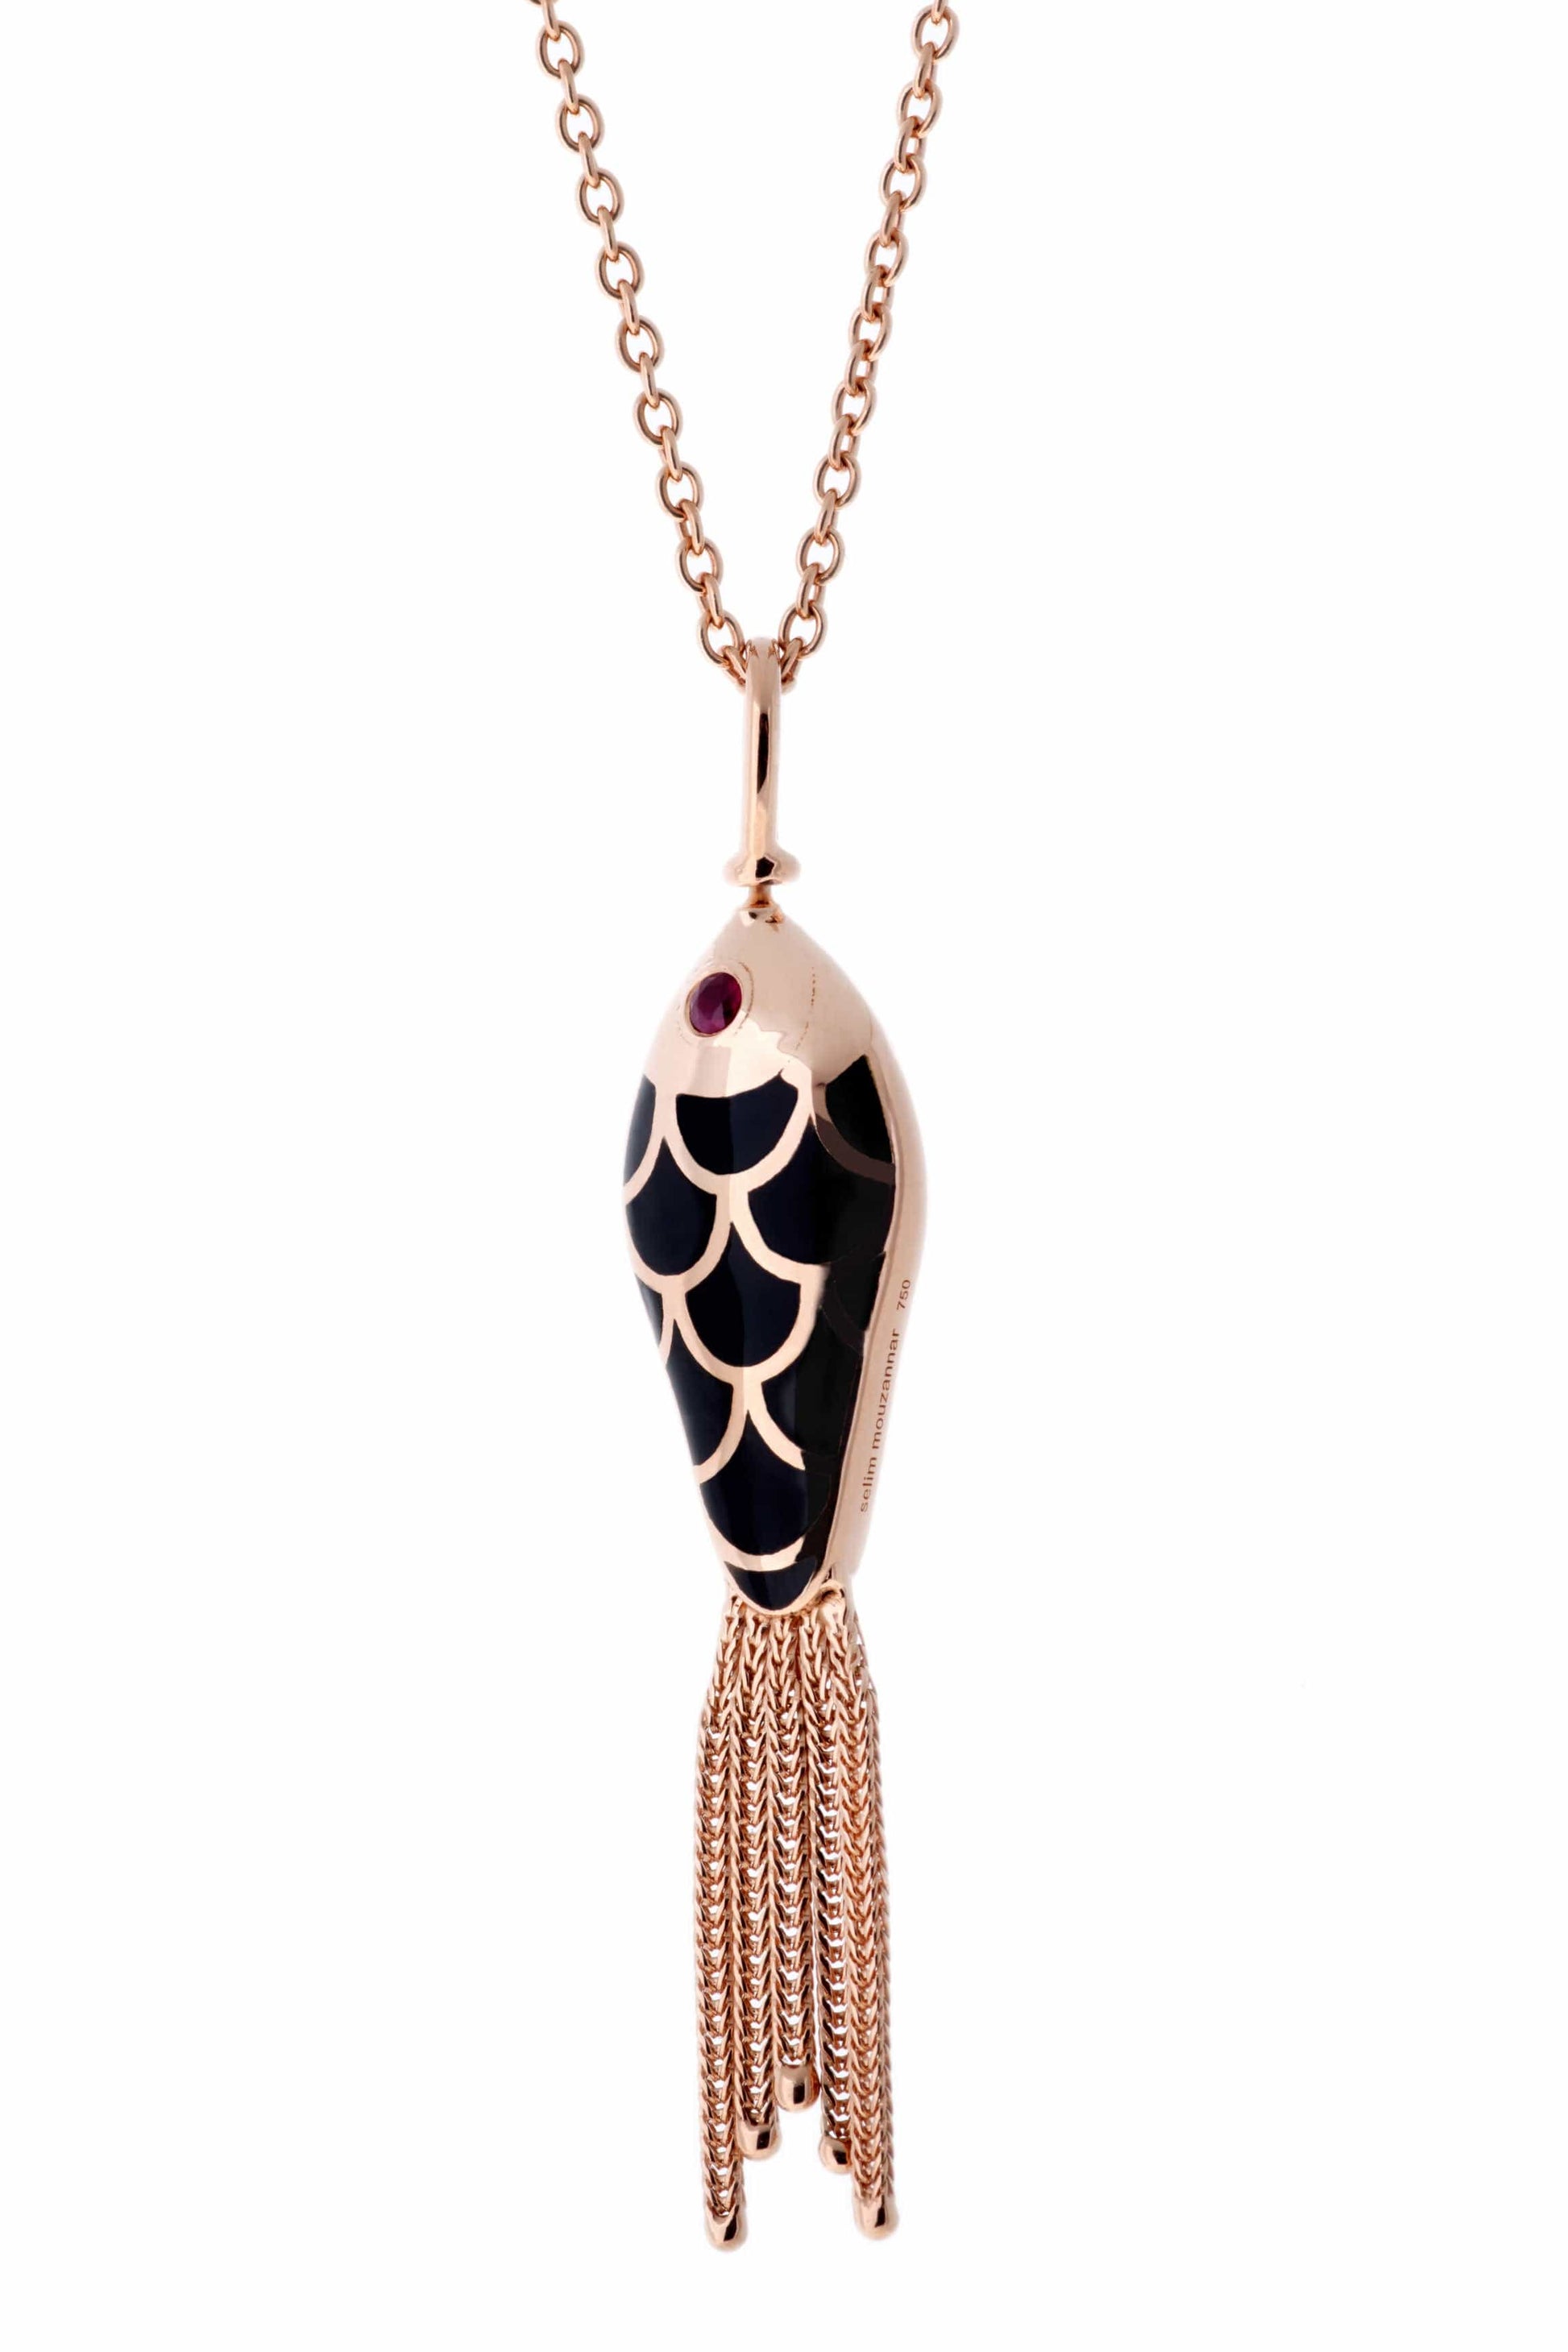 SELIM MOUZANNAR-White and Black Enamel Fish Pendant Necklace-ROSE GOLD